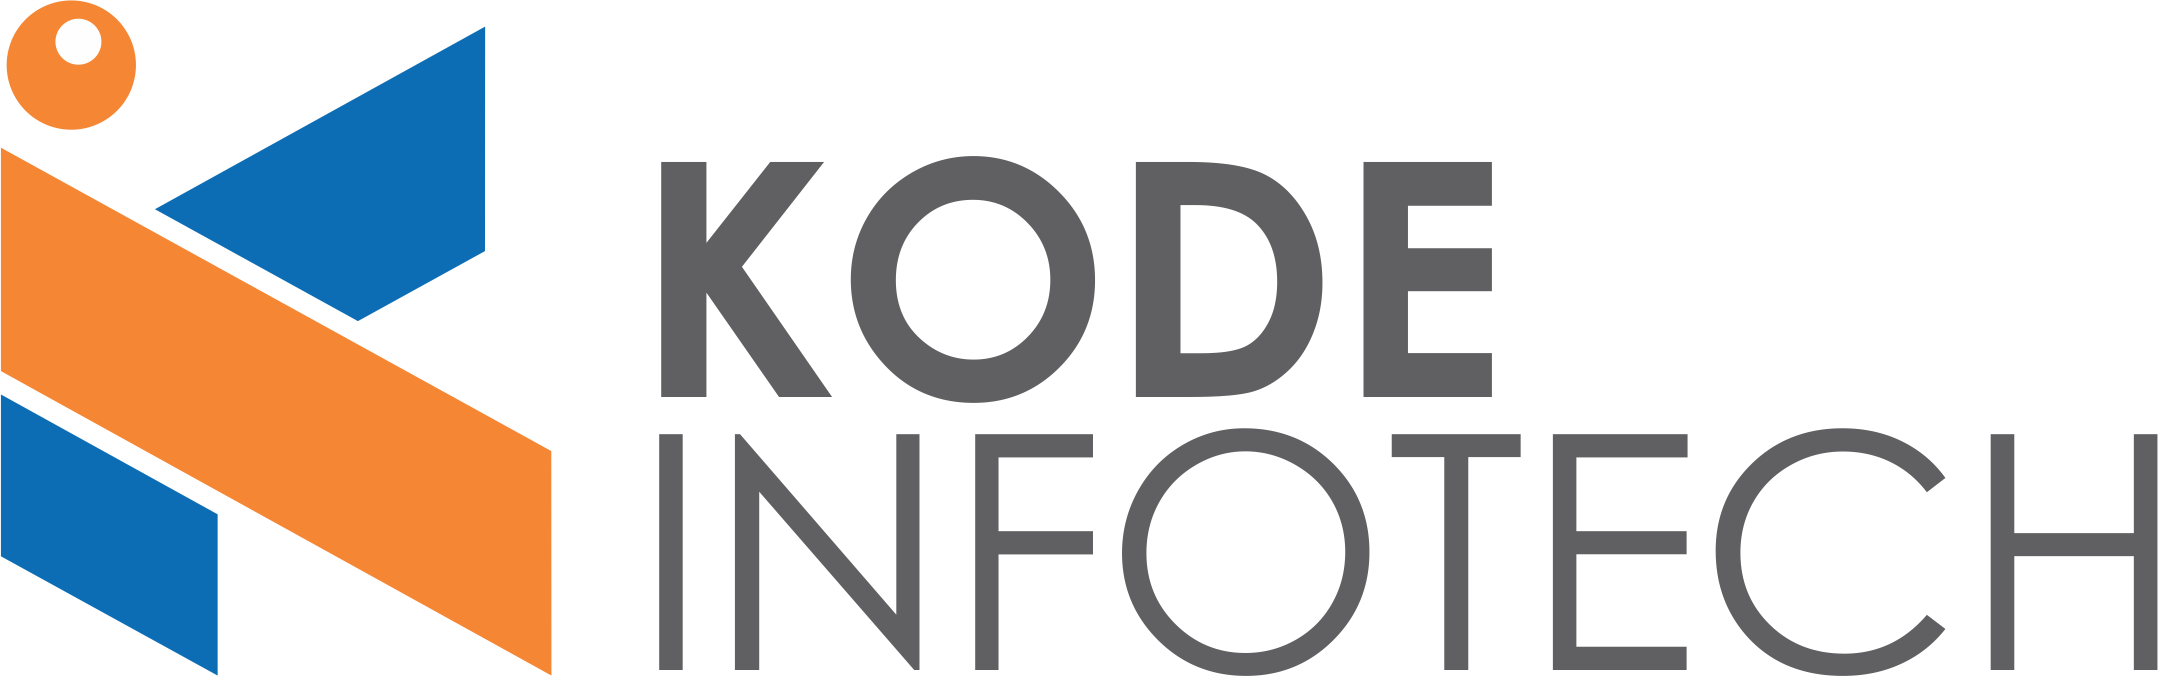 Kode Infotech Логотип png